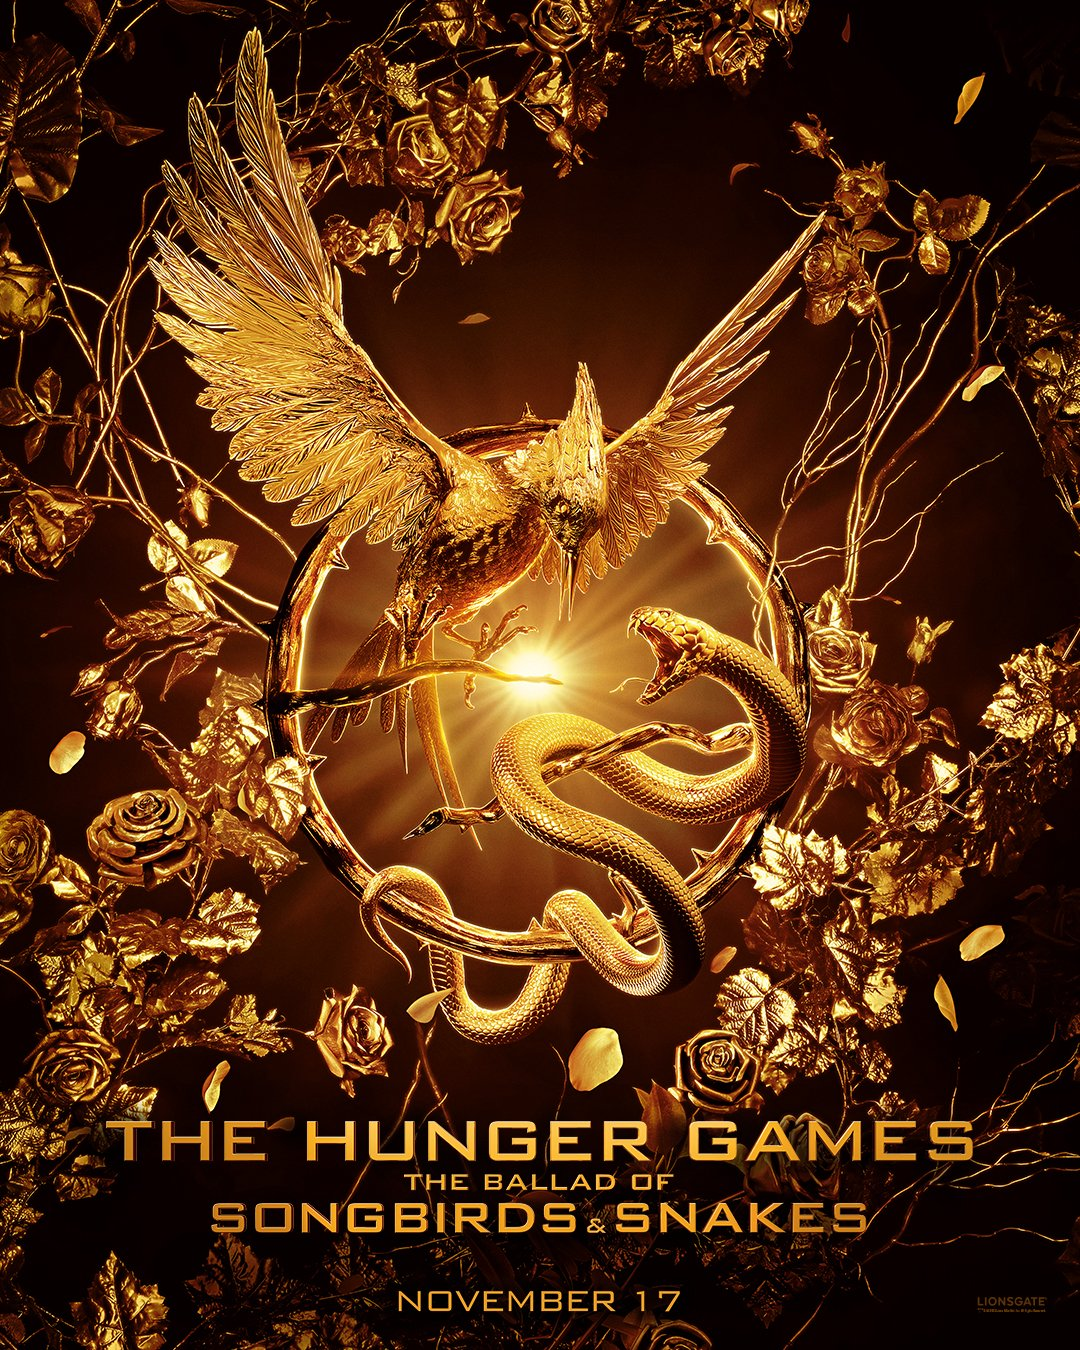 16 Books Like The Hunger Games